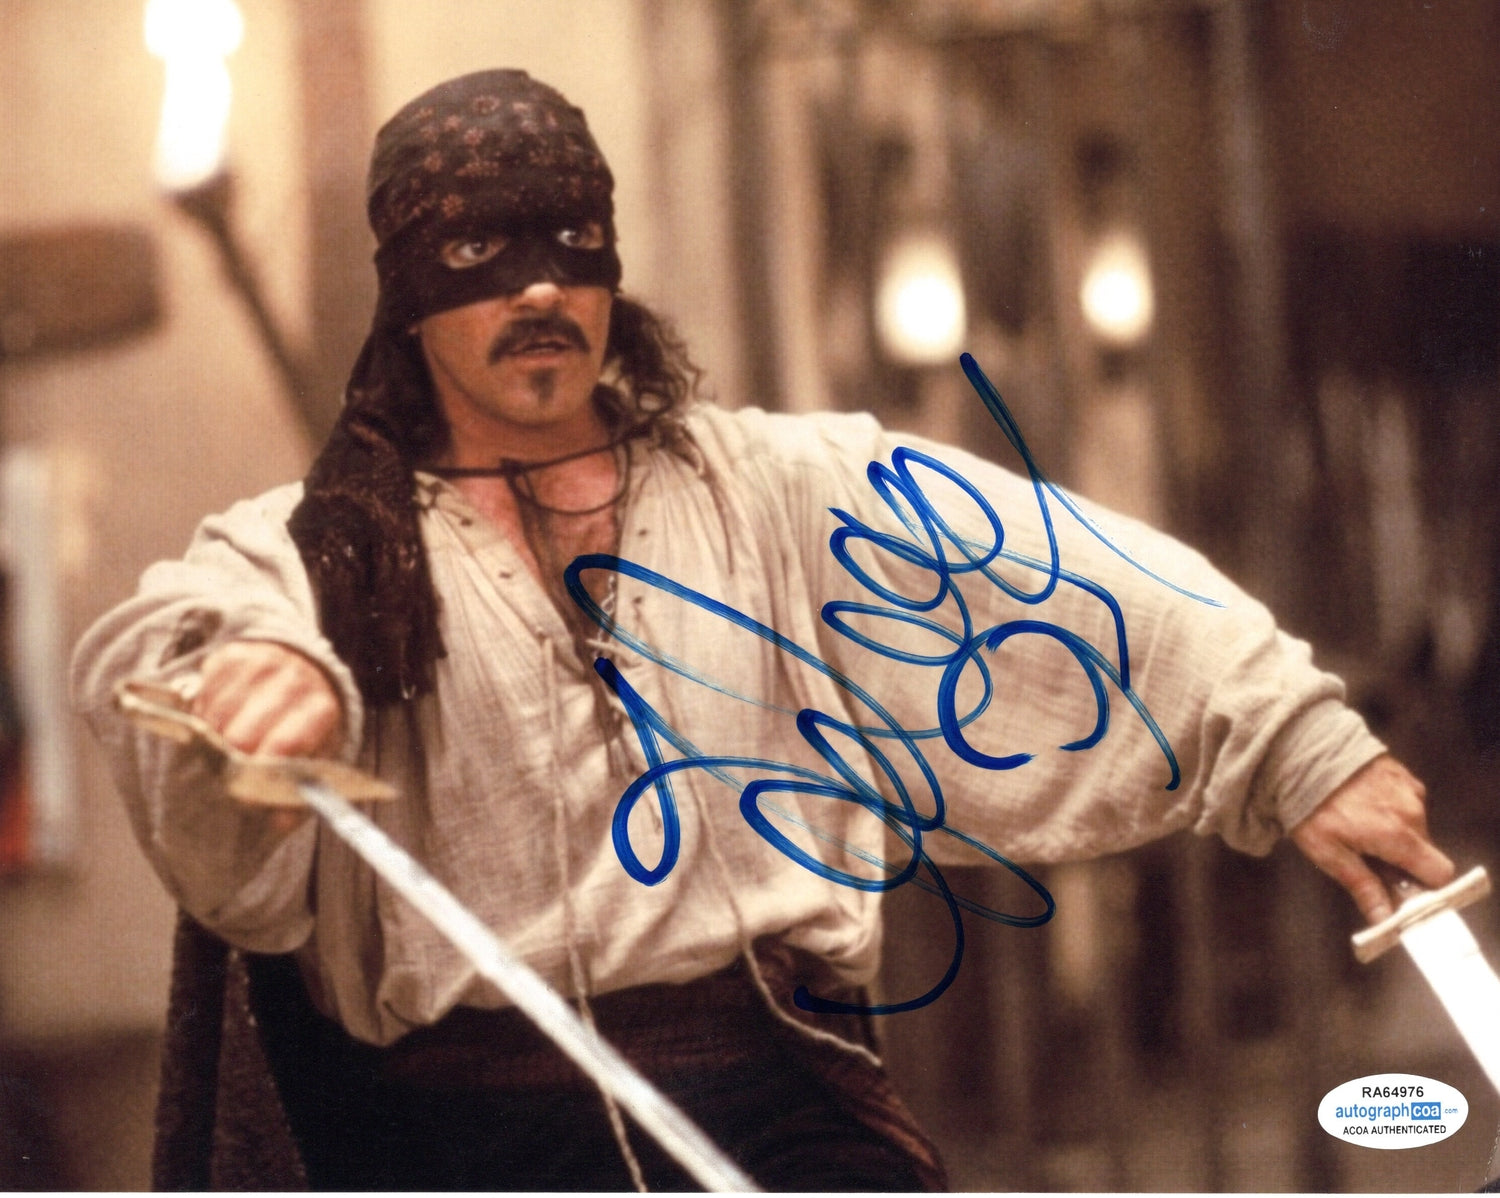 Zorro Antonio Banderas Autographed Signed 8x10 Photo Autograph Pros Llc 4972